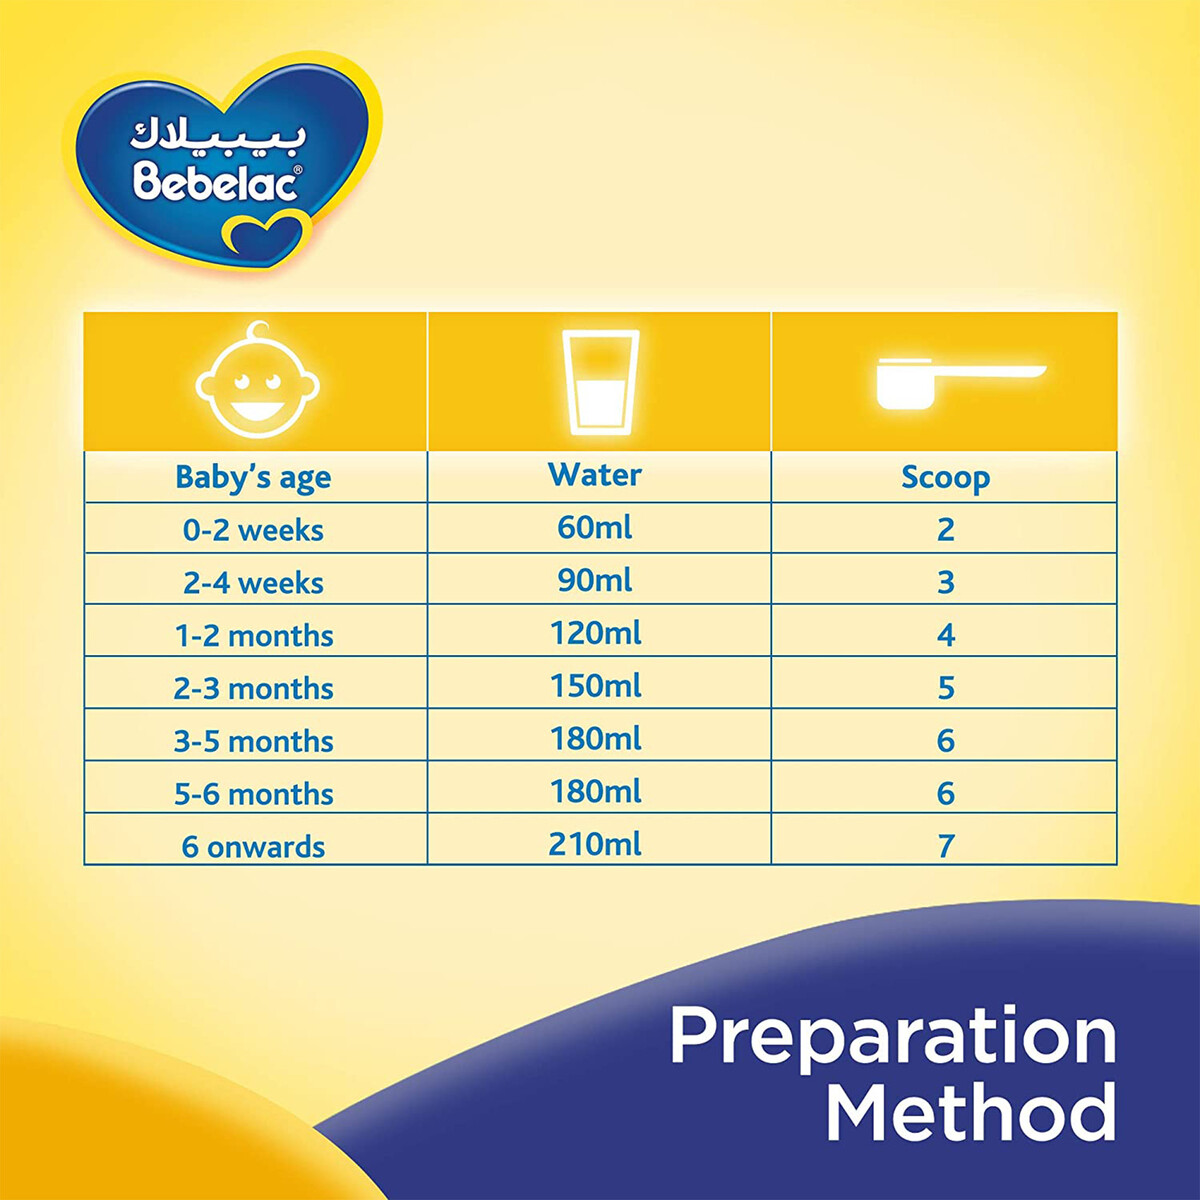 Bebelac Lactose Free Infant Milk Formula From 0-6 Months 400 g